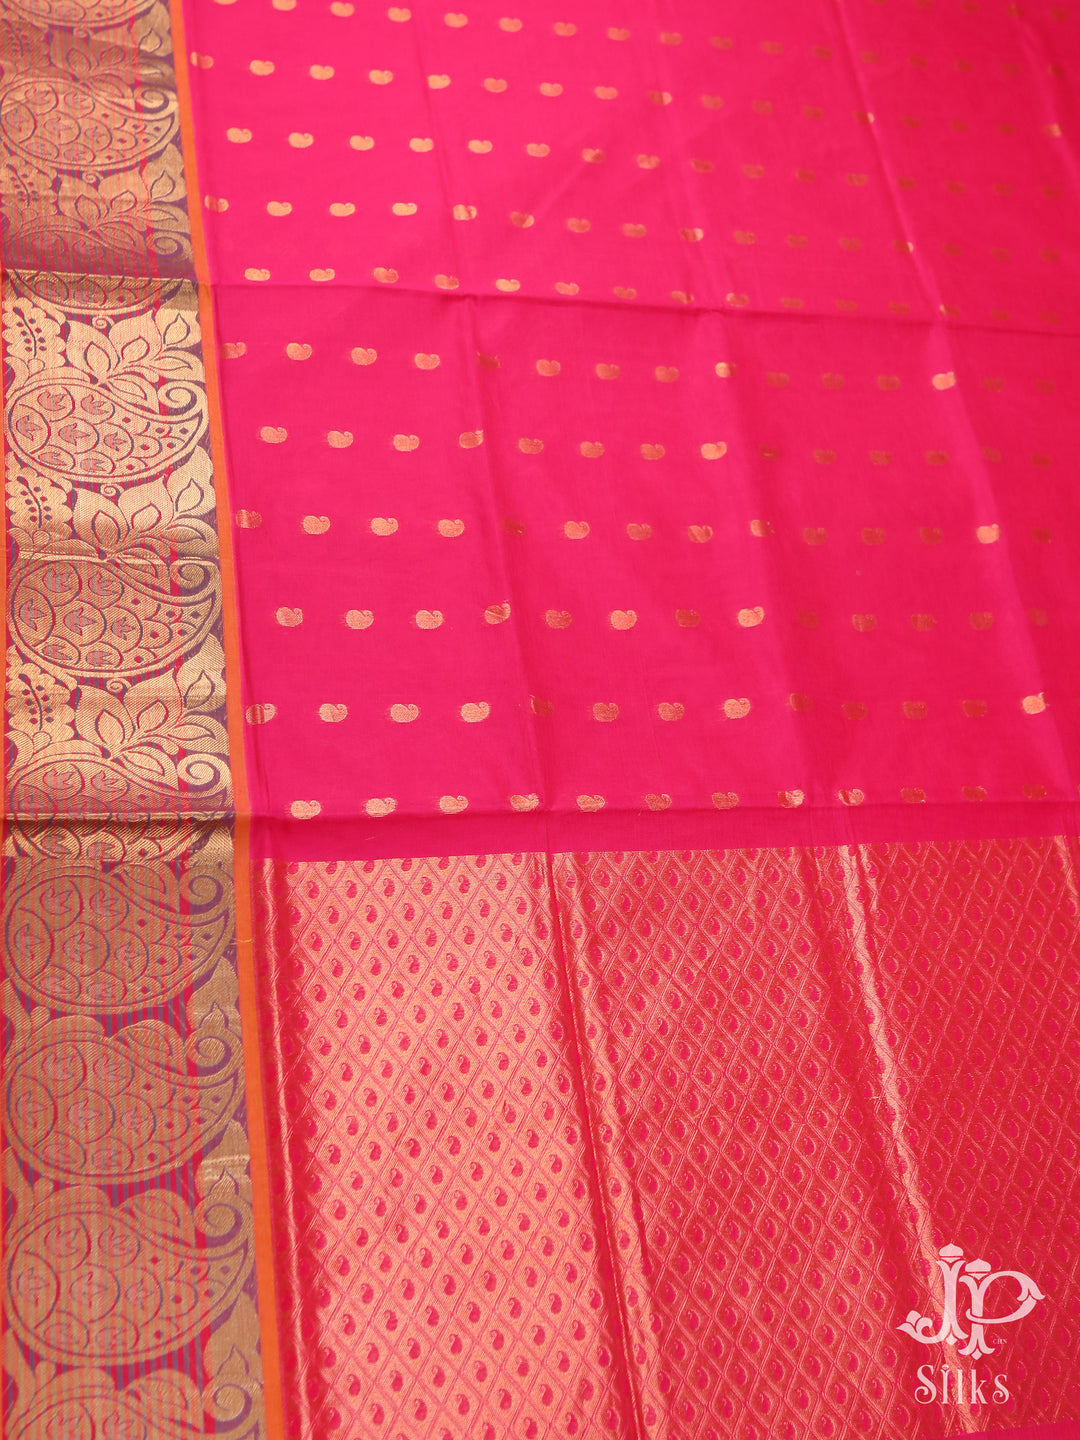 Magenta Pink Venkatagiri Cotton Saree - D9921